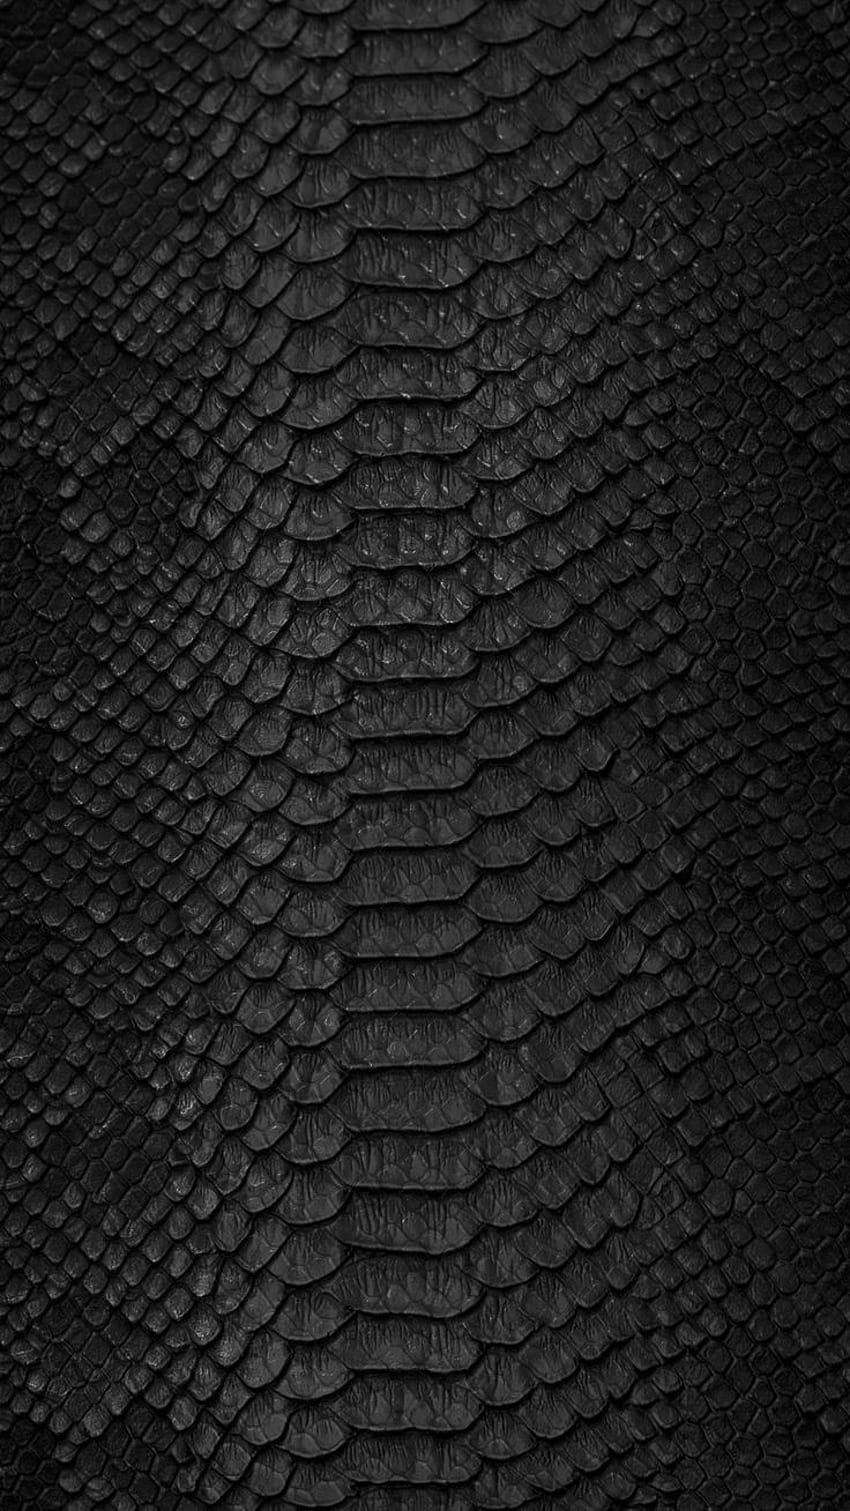 Black Snake Skin Texture for Background Stock Photo  Image of hide  backdrop 172862854